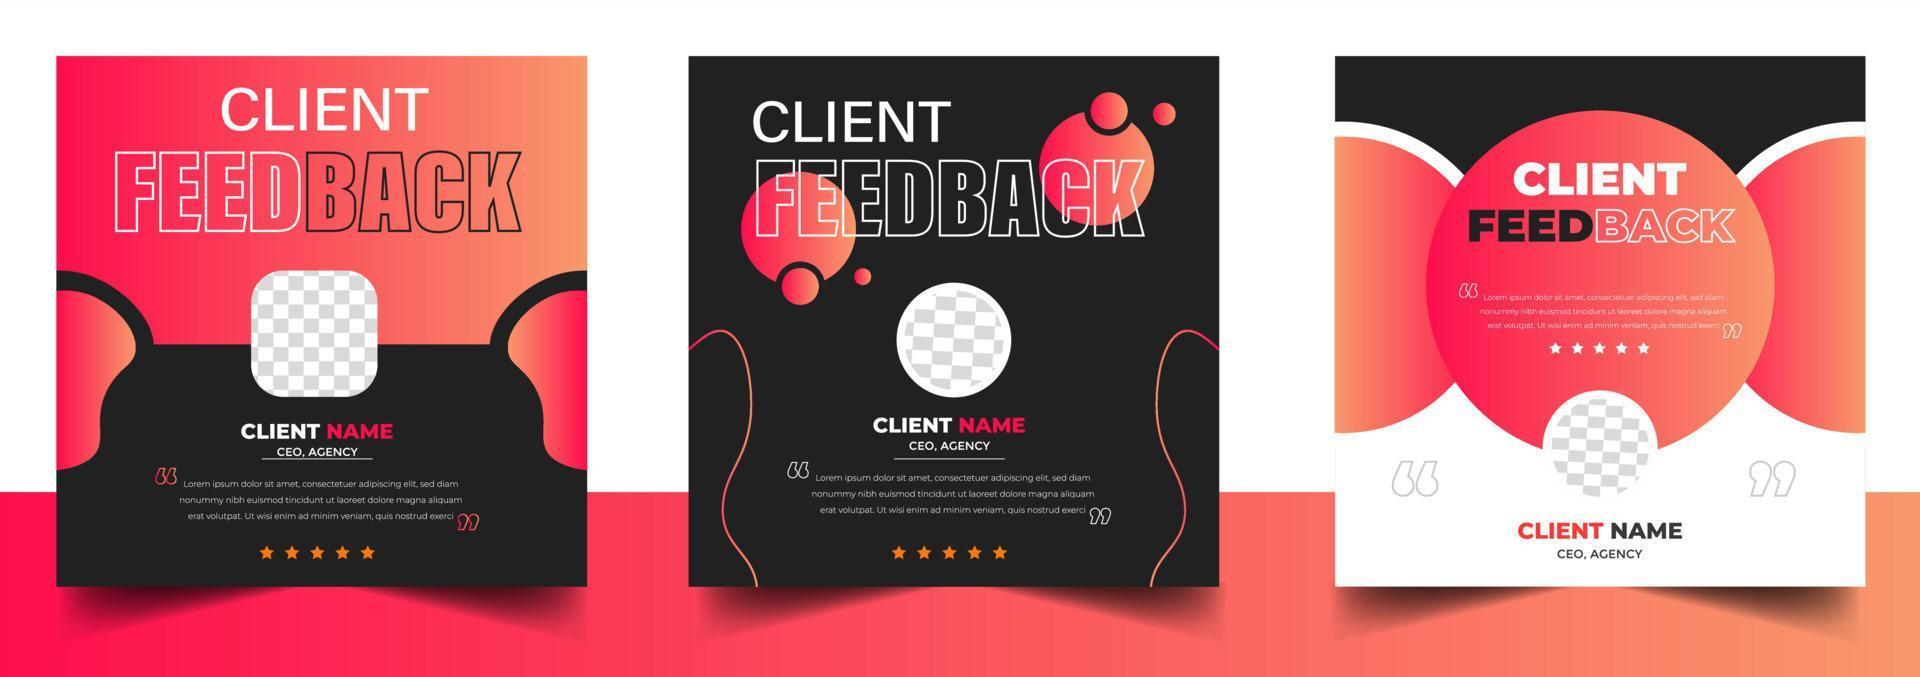 Customer feedback testimonial social media post web banner template. client testimonials social media post banner design template with red color vector